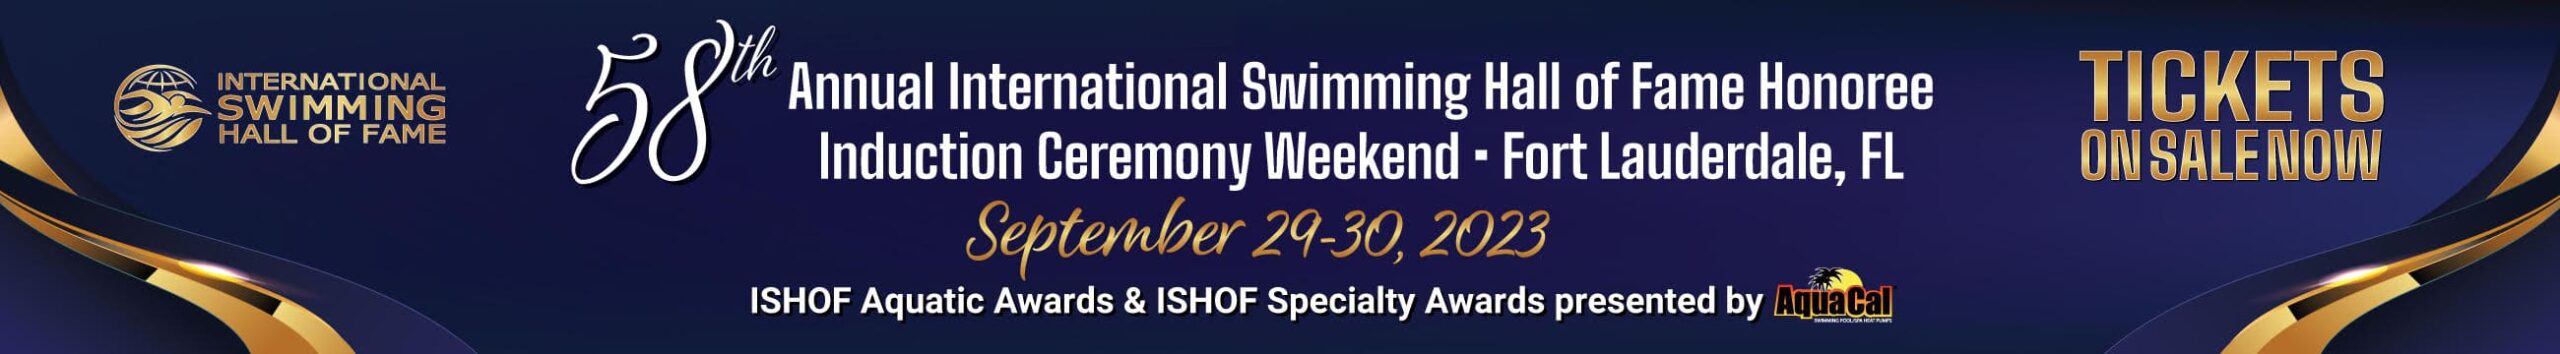 International Swimming Hall of Fame